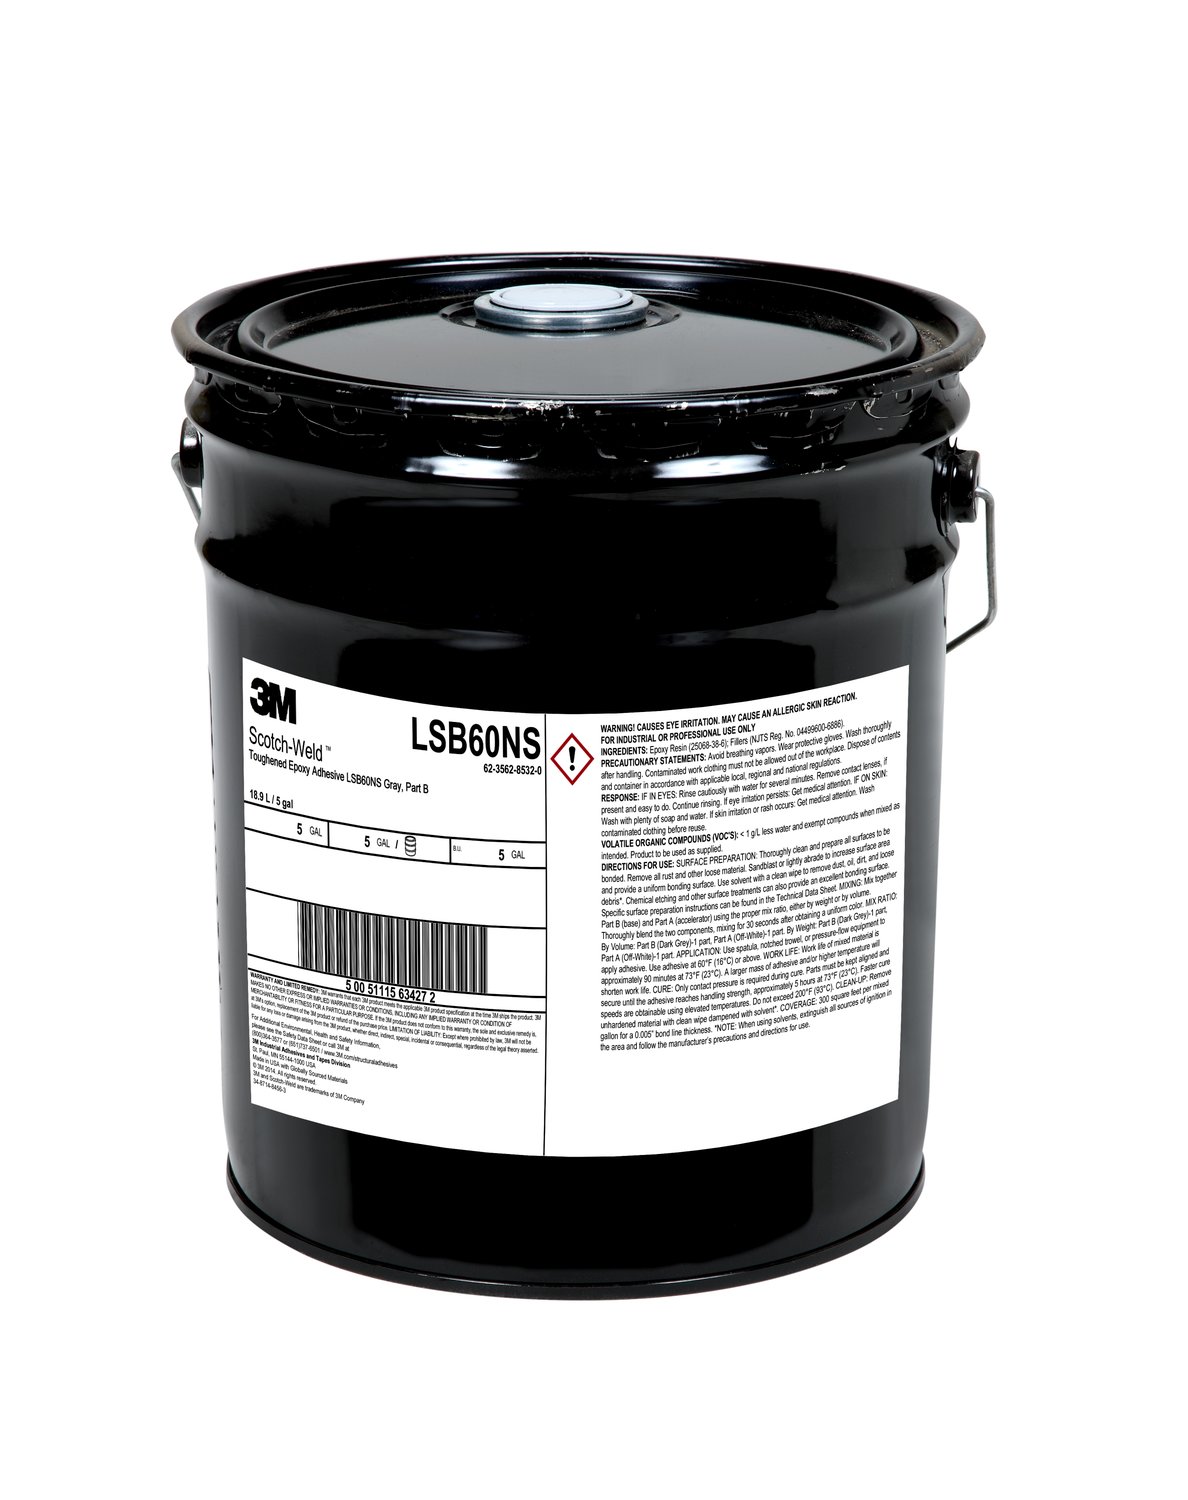 7100079534 - 3M Scotch-Weld Toughened Epoxy Adhesive LSB60NS, Gray, Part B, 5
Gallon (Pail), Drum